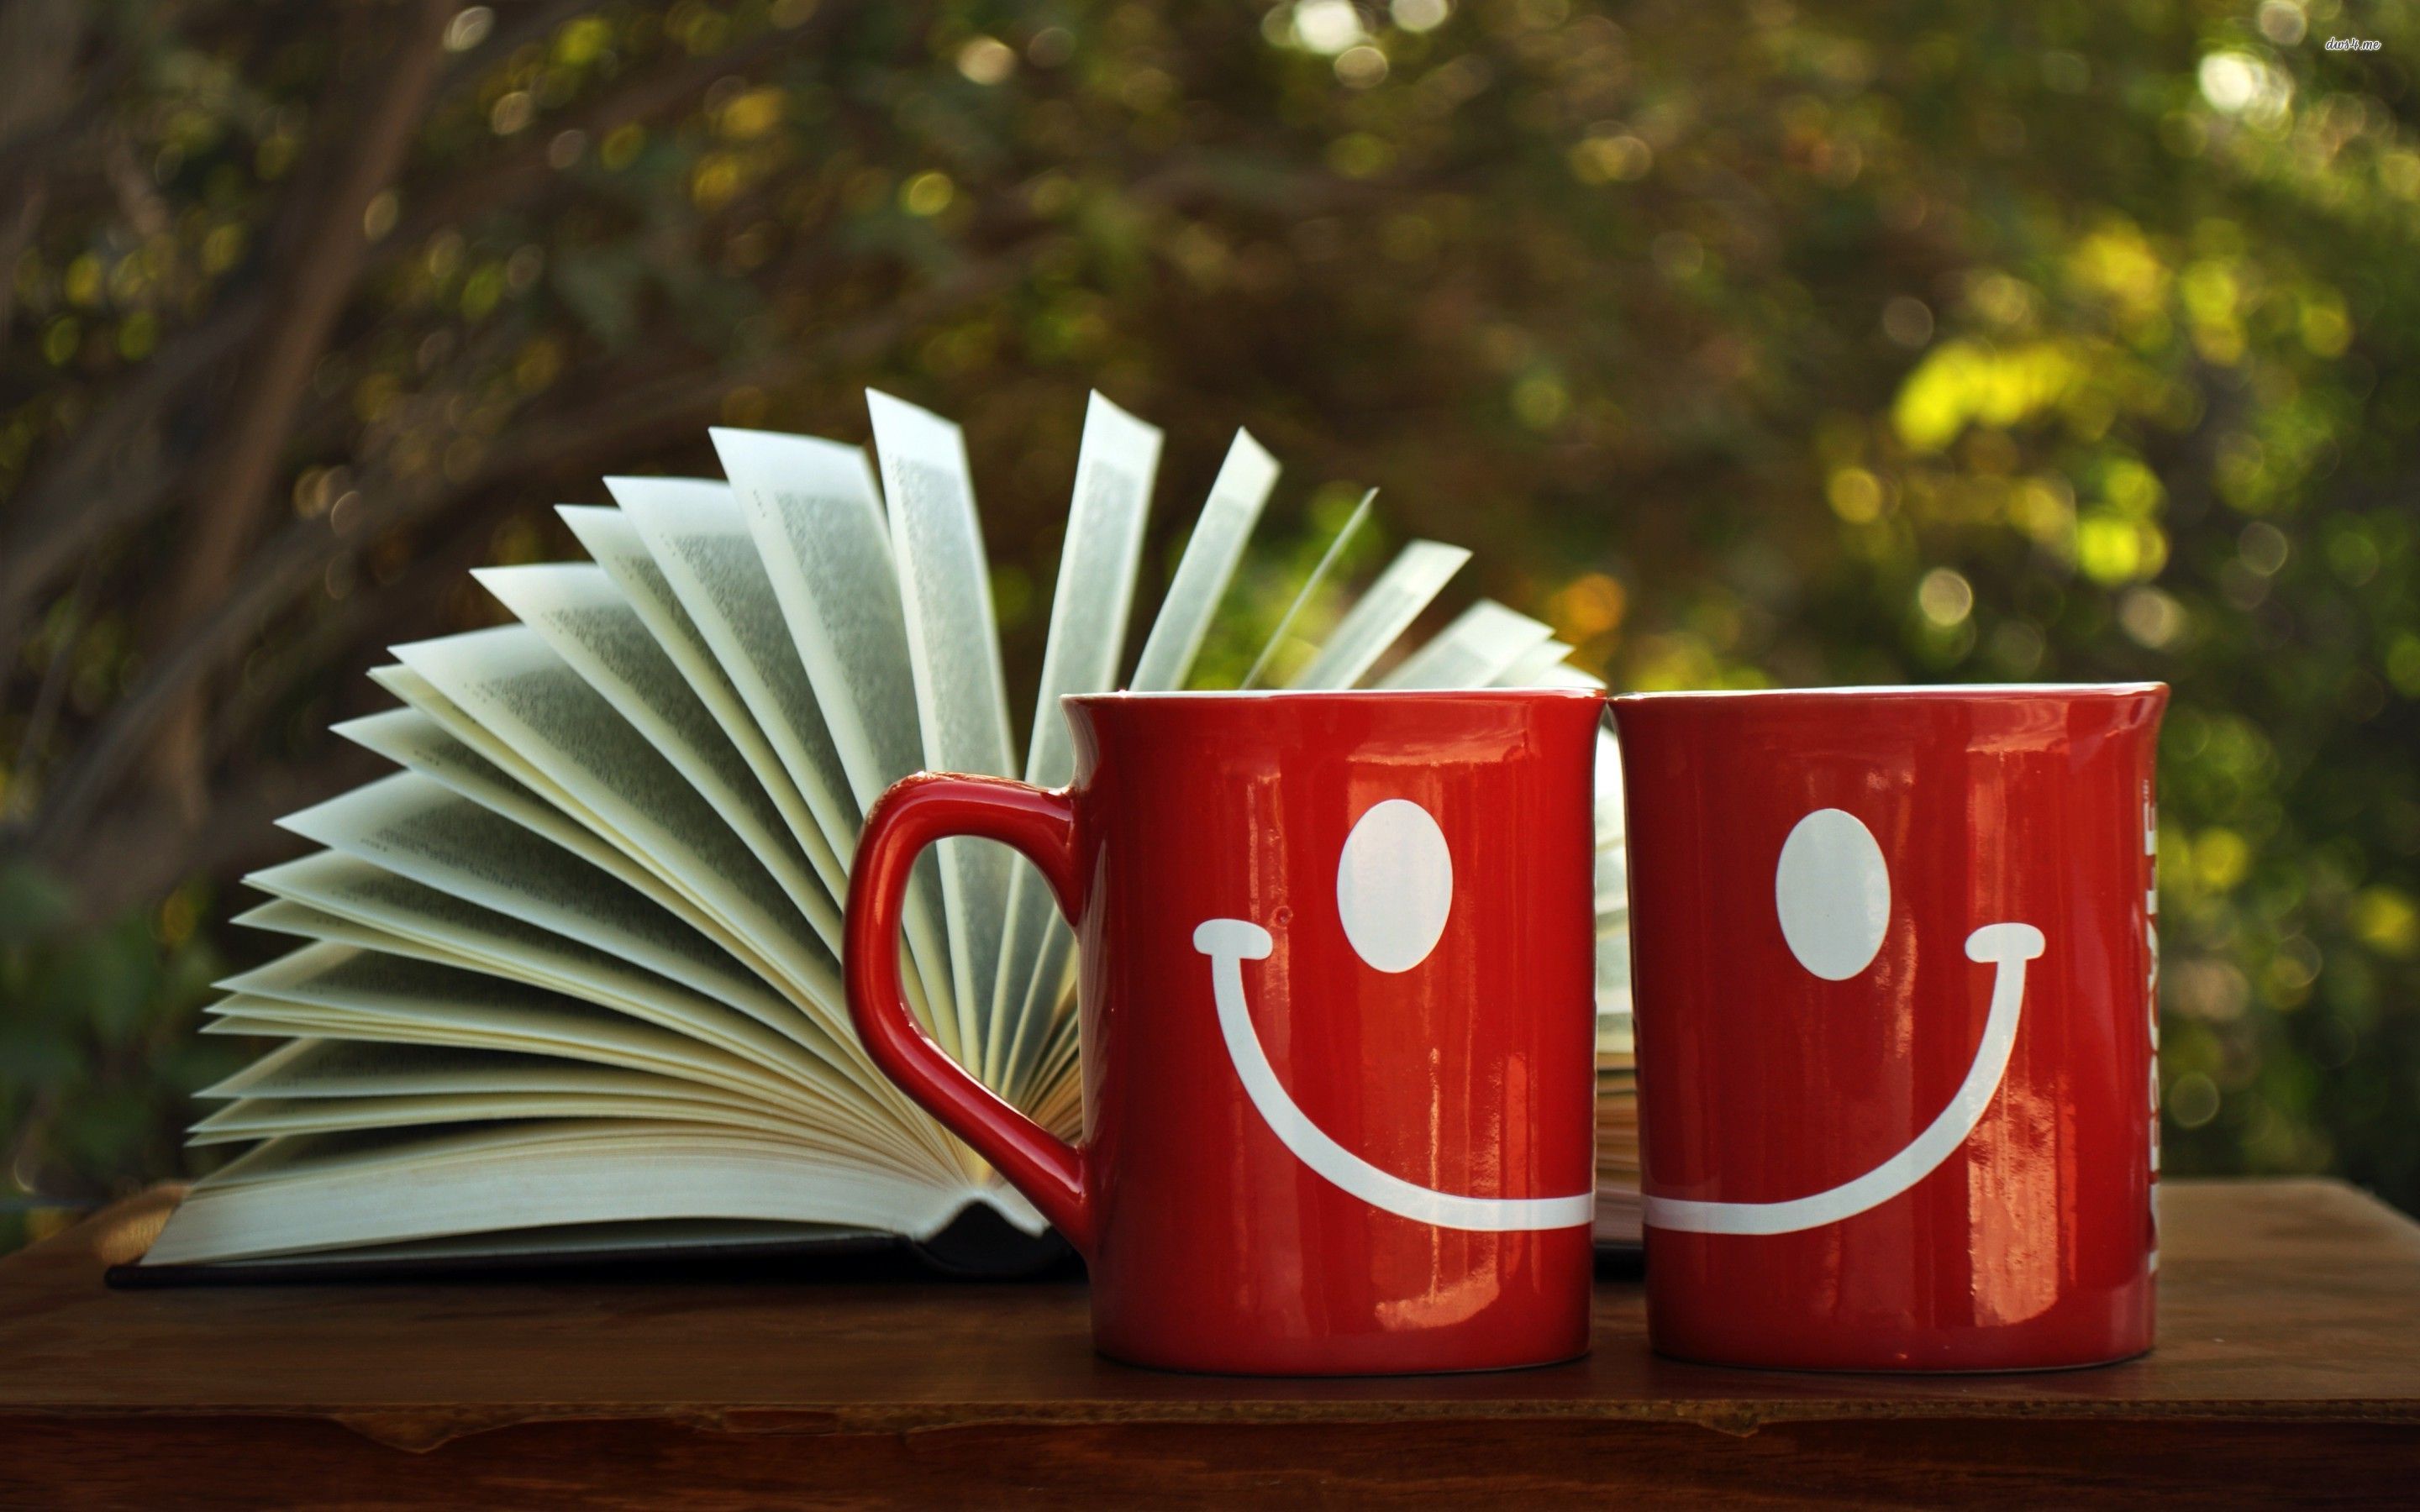 Coffee Mug With Books - 2880x1800 Wallpaper 